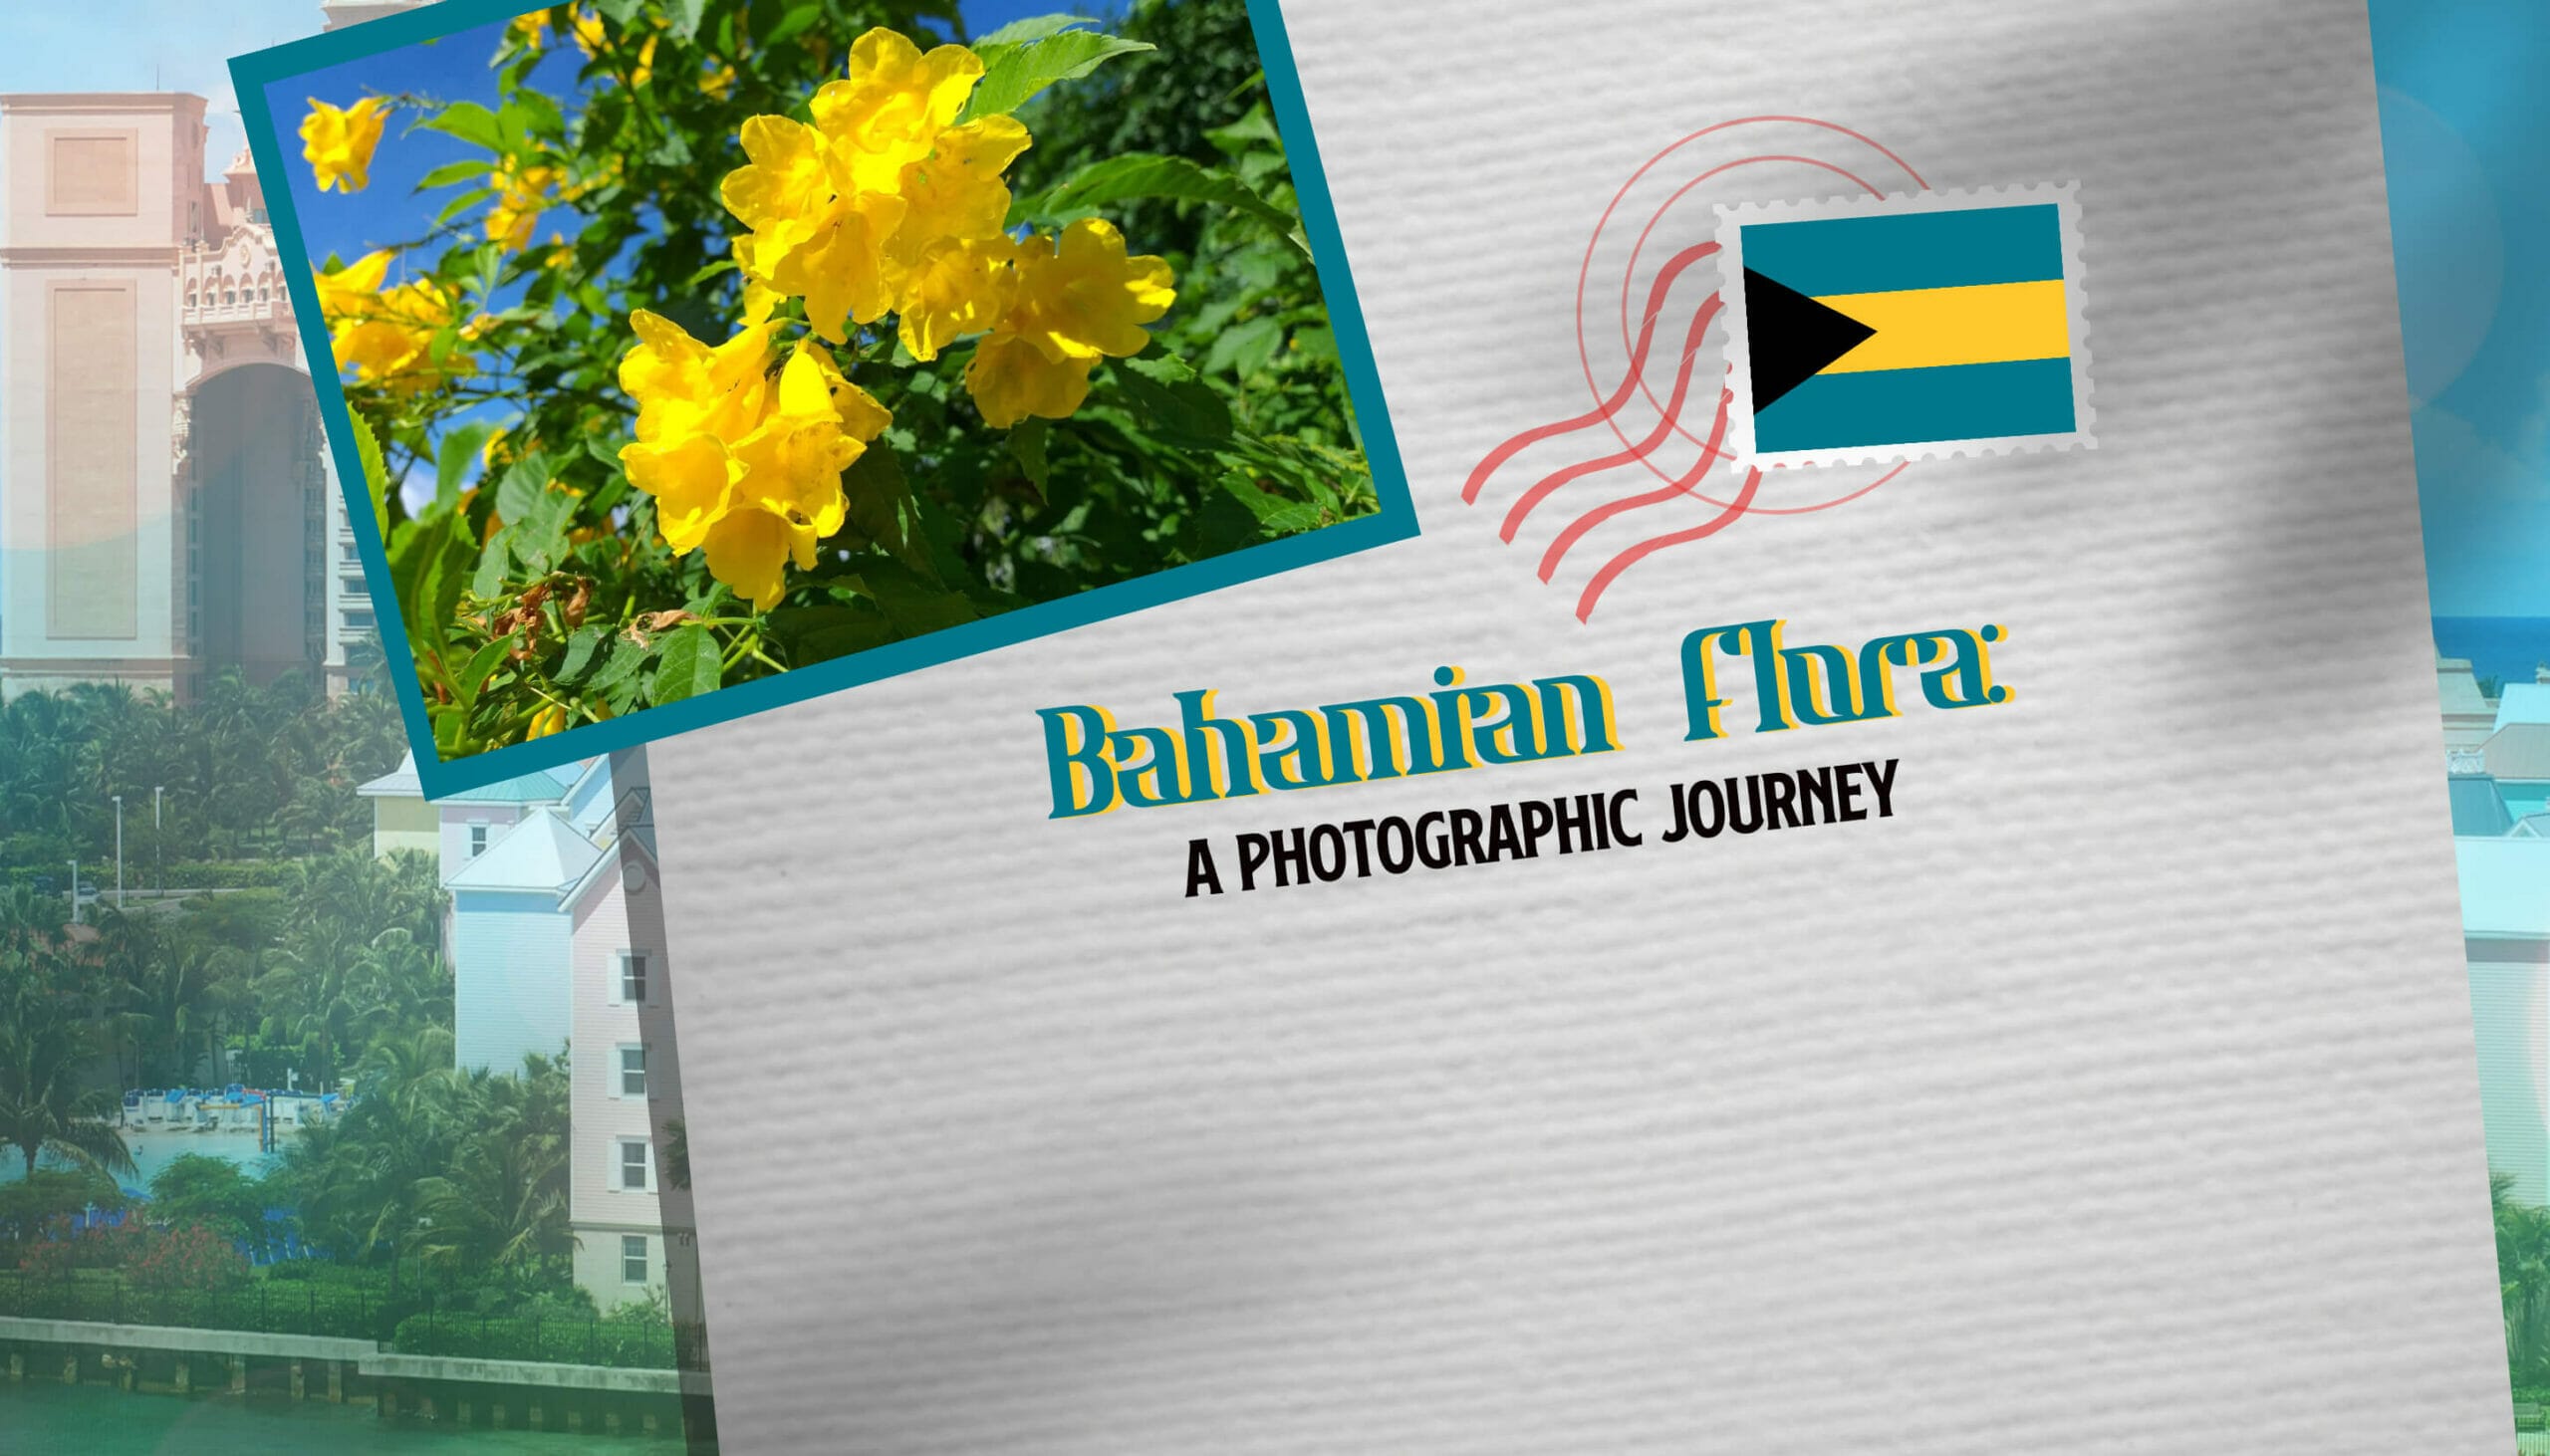 Bahamian Flora A Photographic Journey